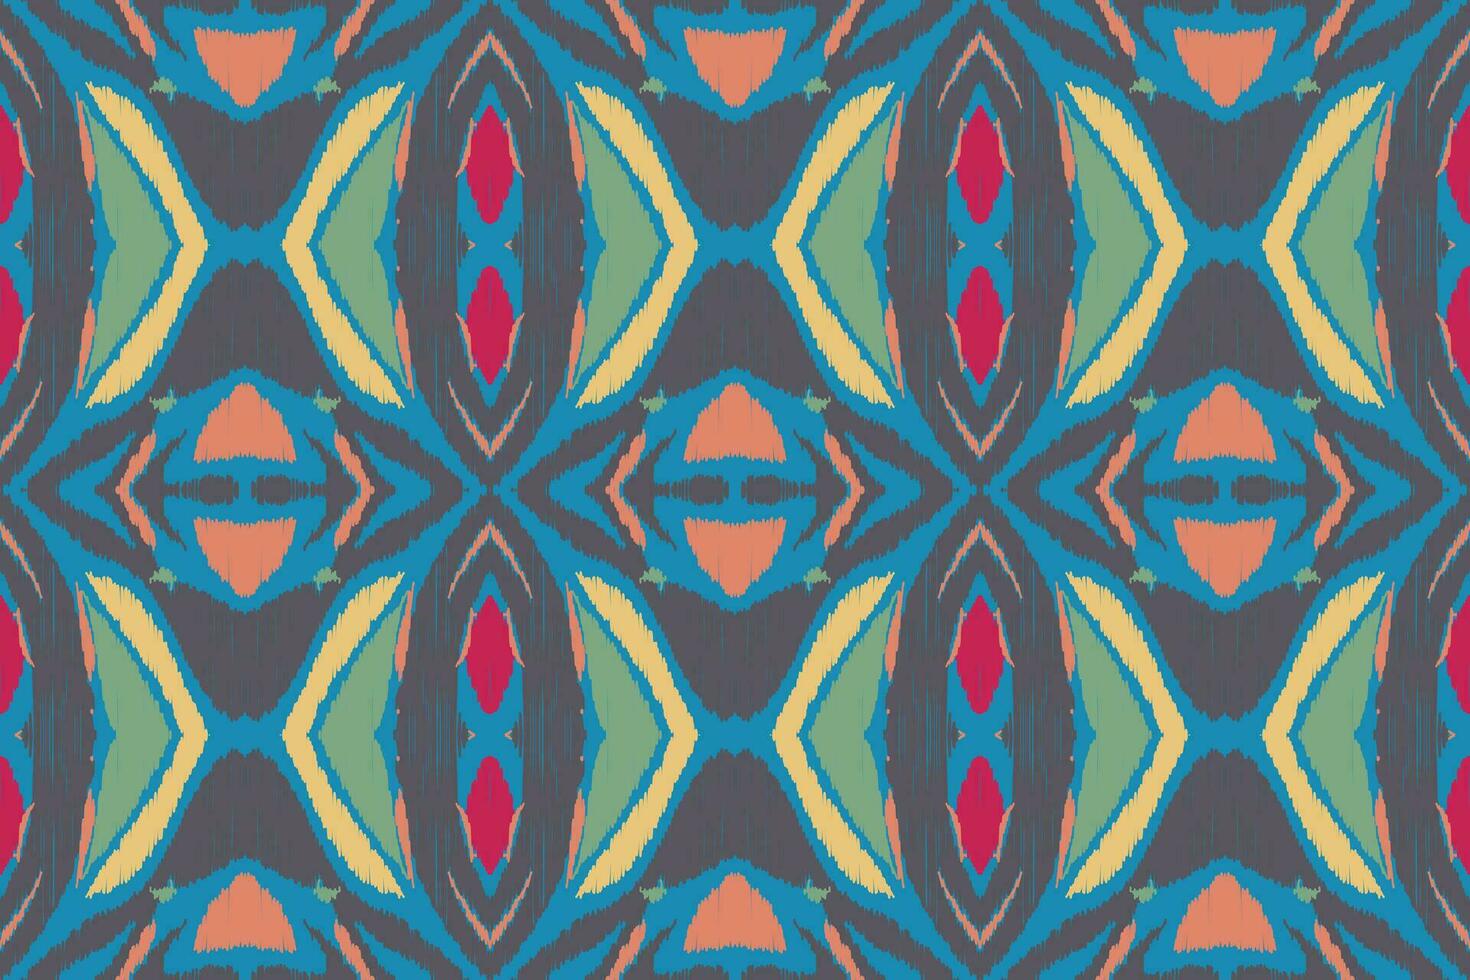 ikat damasco cachemir bordado antecedentes. ikat damasco geométrico étnico oriental modelo tradicional. ikat azteca estilo resumen diseño para impresión textura,tela,sari,sari,alfombra. vector